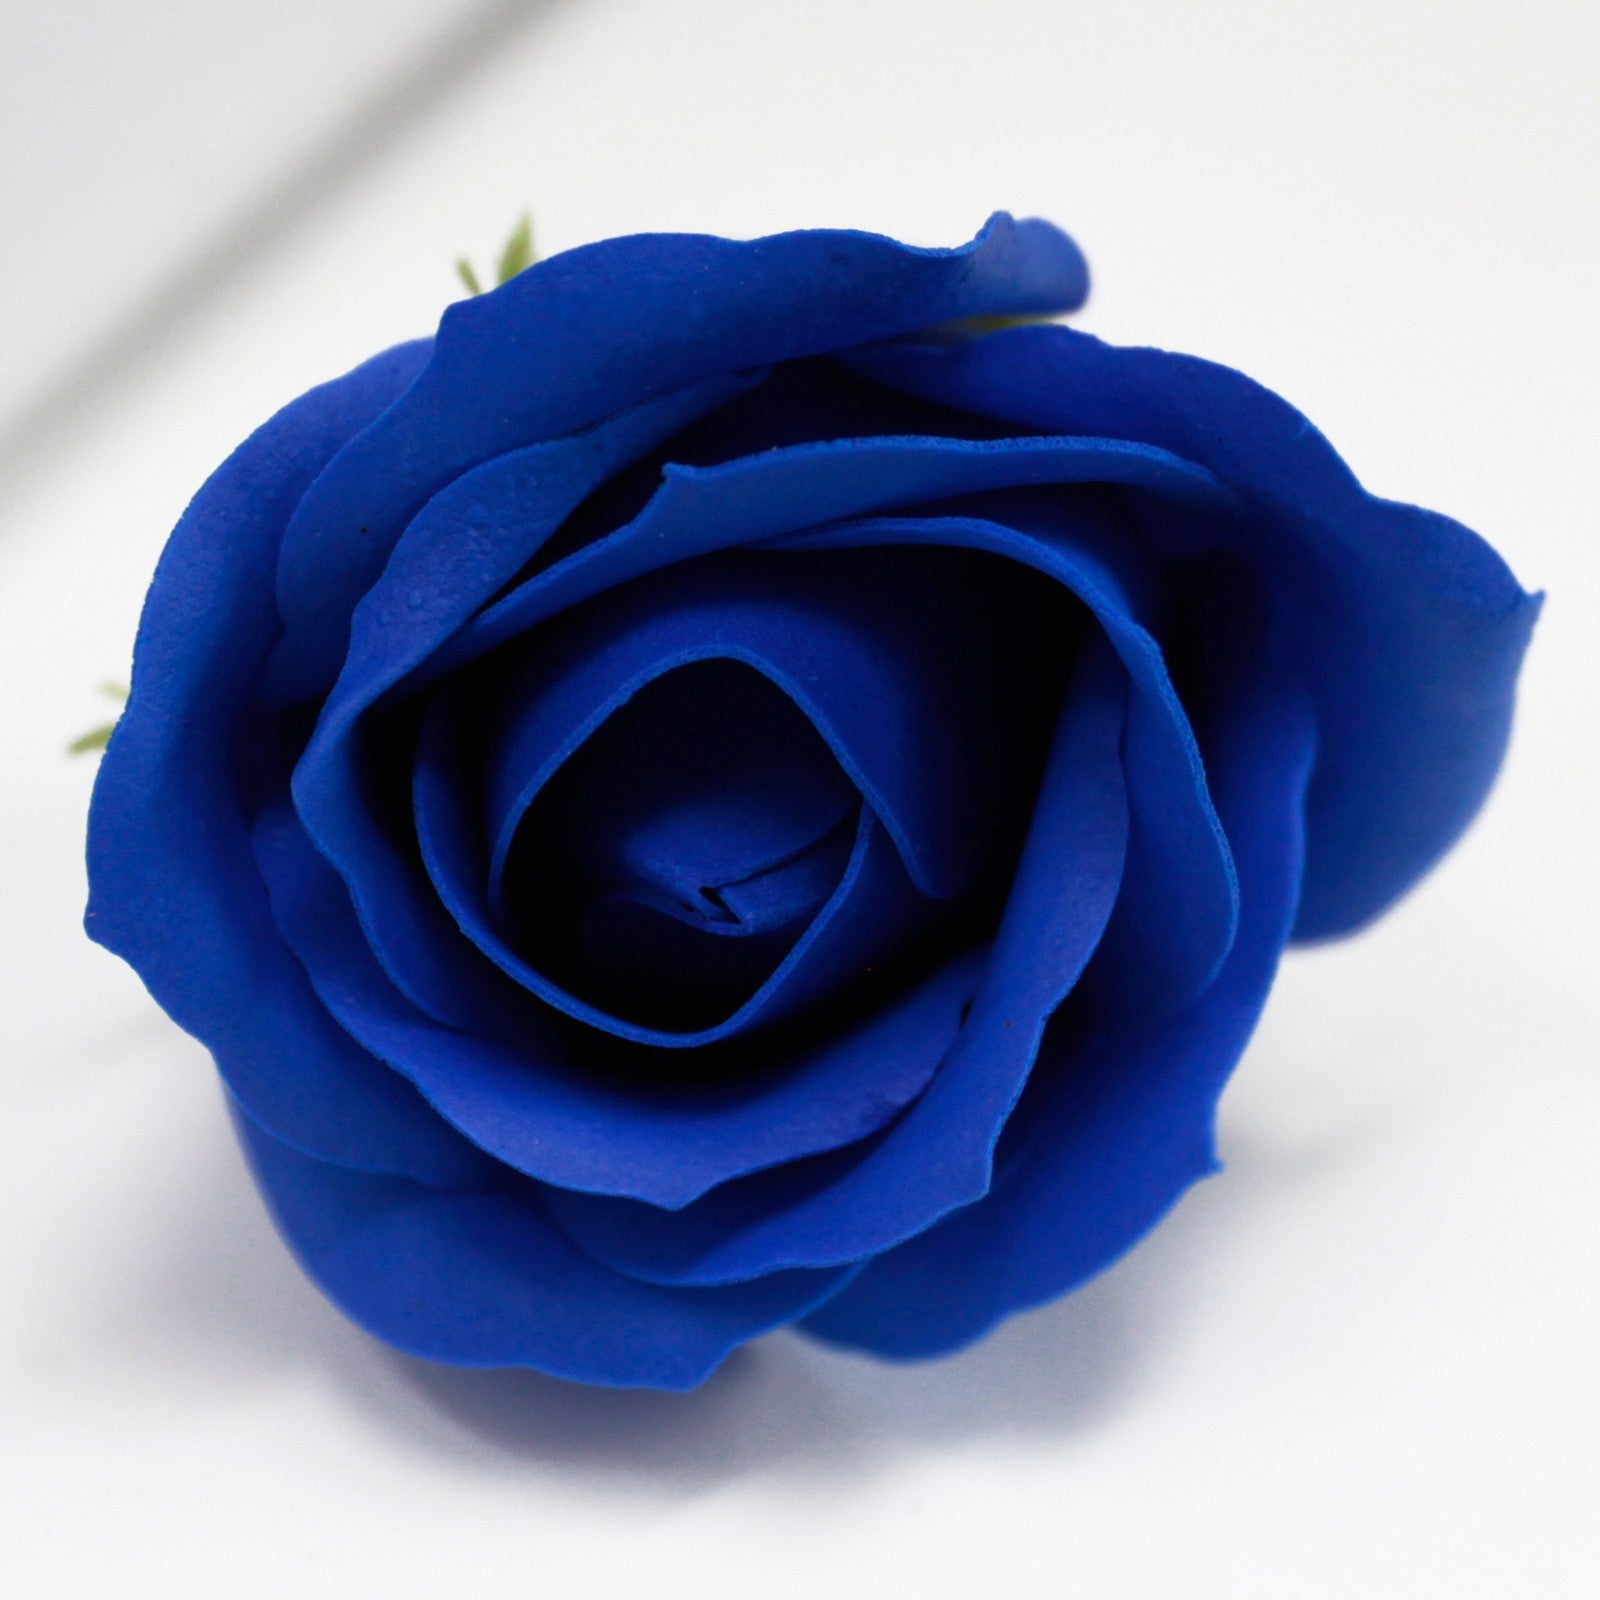 Craft Soap Flowers - Med Rose - Royal Blue x 10 pcs